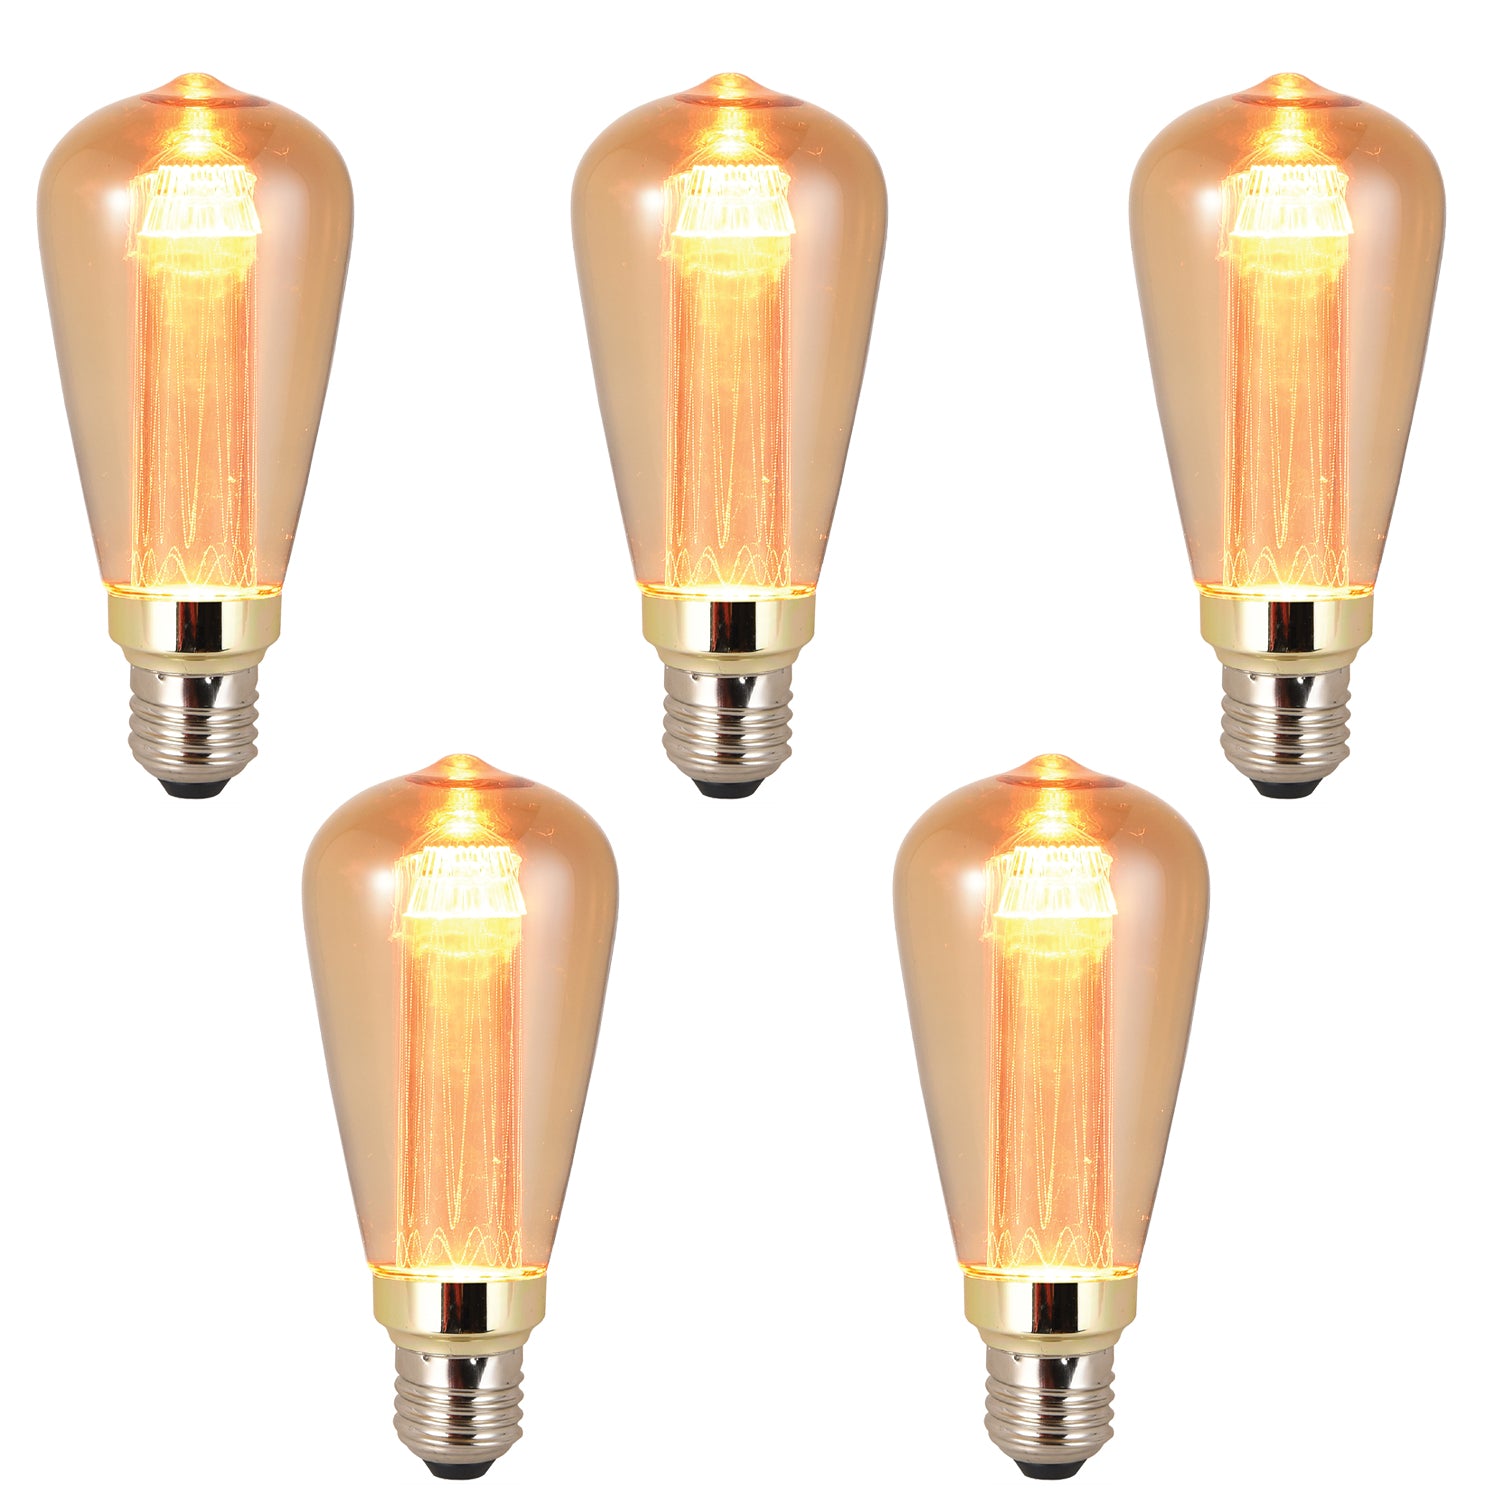 E27 Vintage Edison light bulb 3W Non dimmable filament bulb-5 Pack